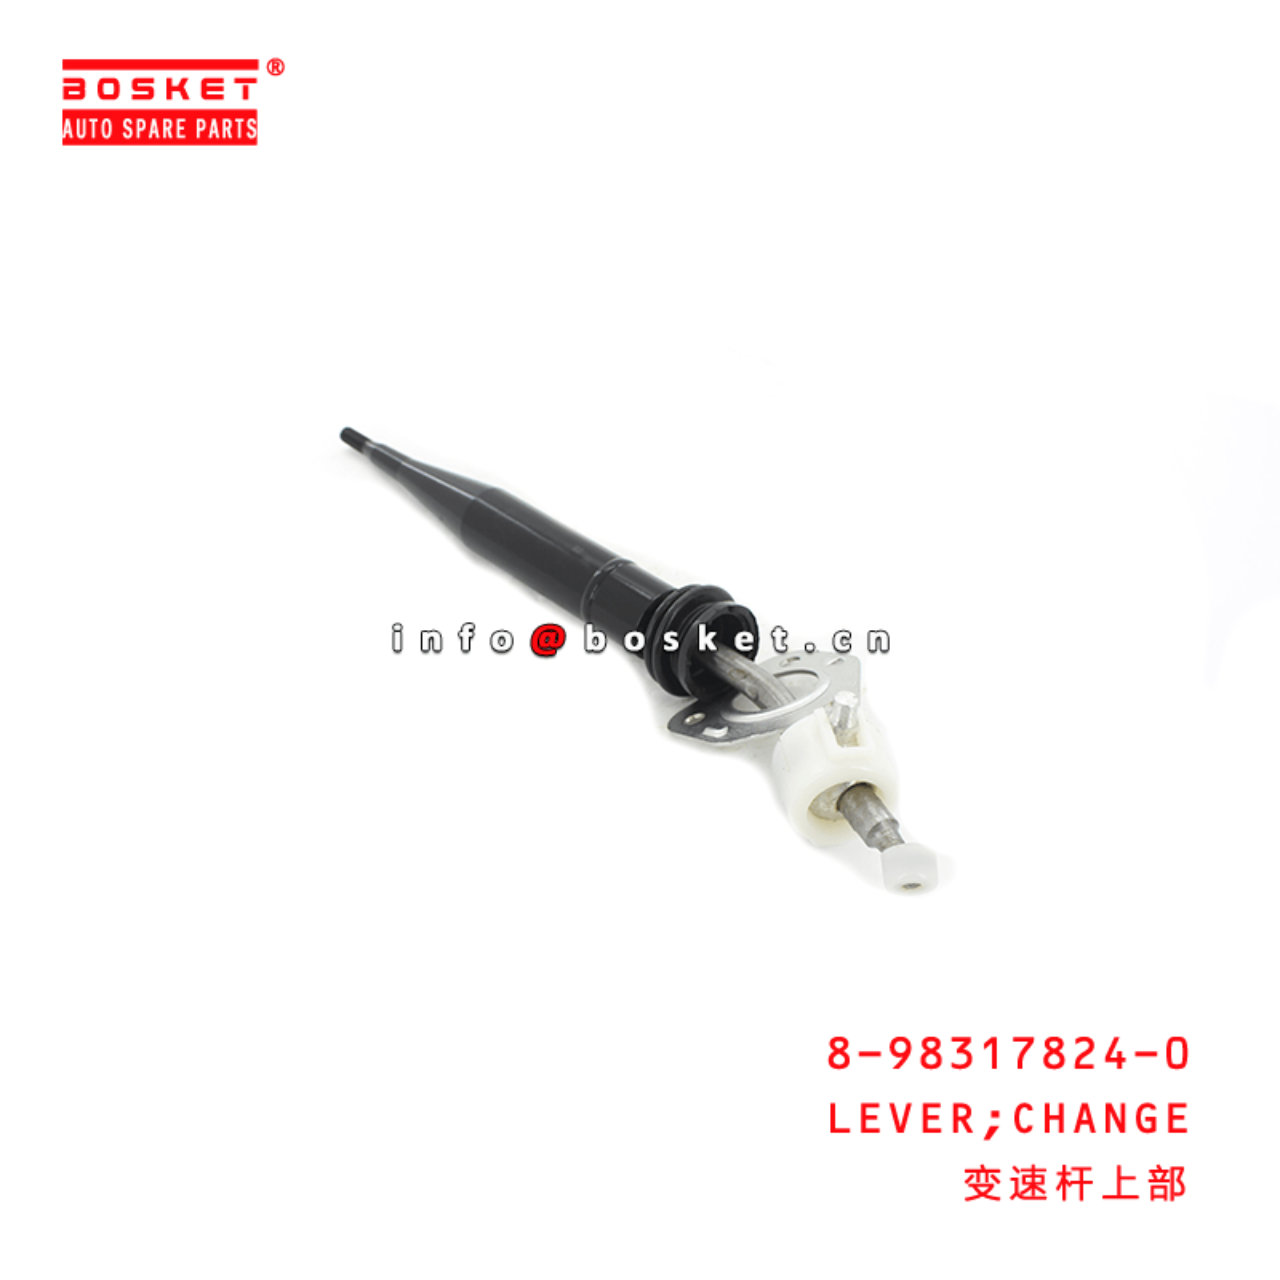 8-98317824-0 Change Lever Suitable for ISUZU D-MAX 8983178240